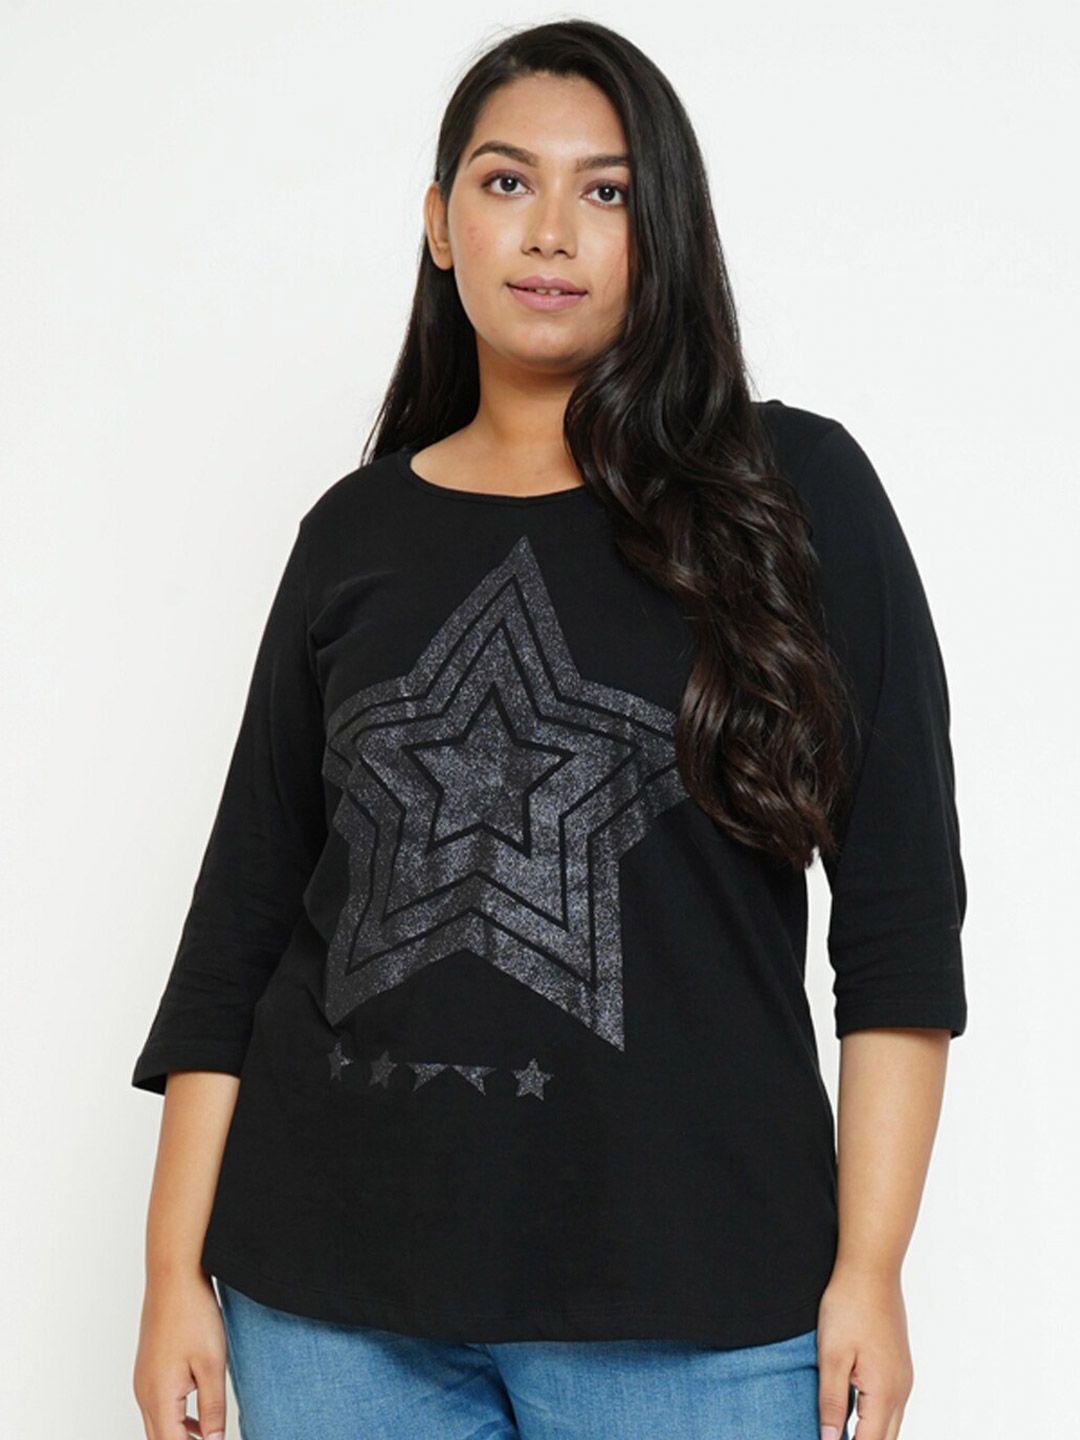 amydus women black graphic printed plus size t-shirt